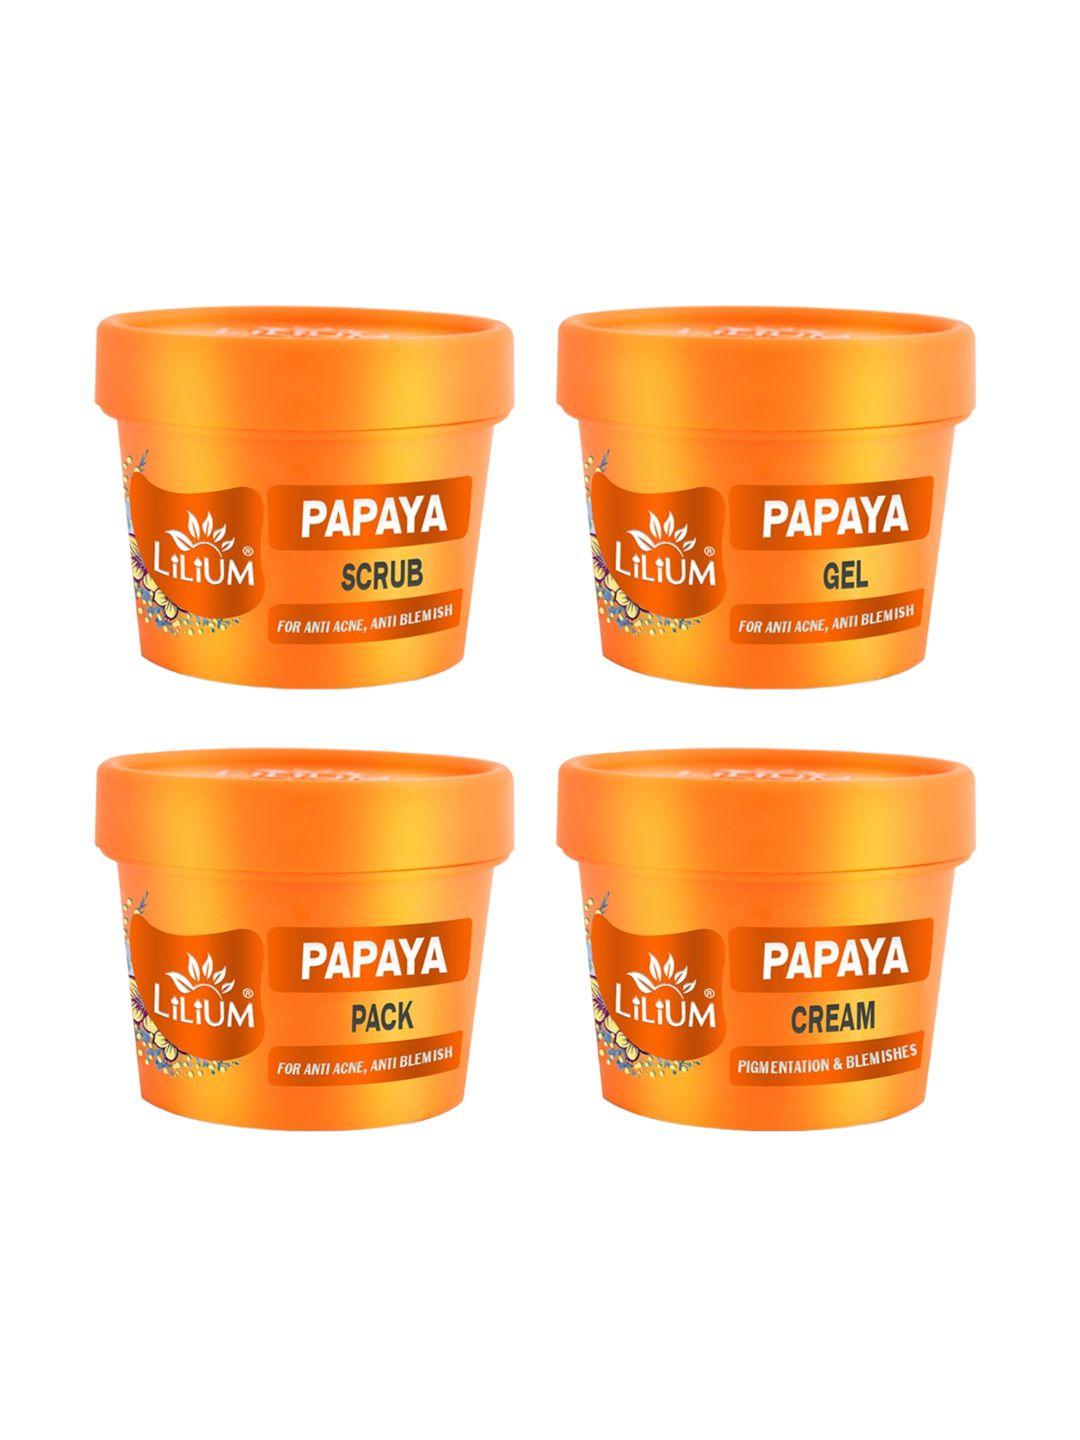 lilium papaya facial scrub gel pack cream set for acne & blemishes - 100g each